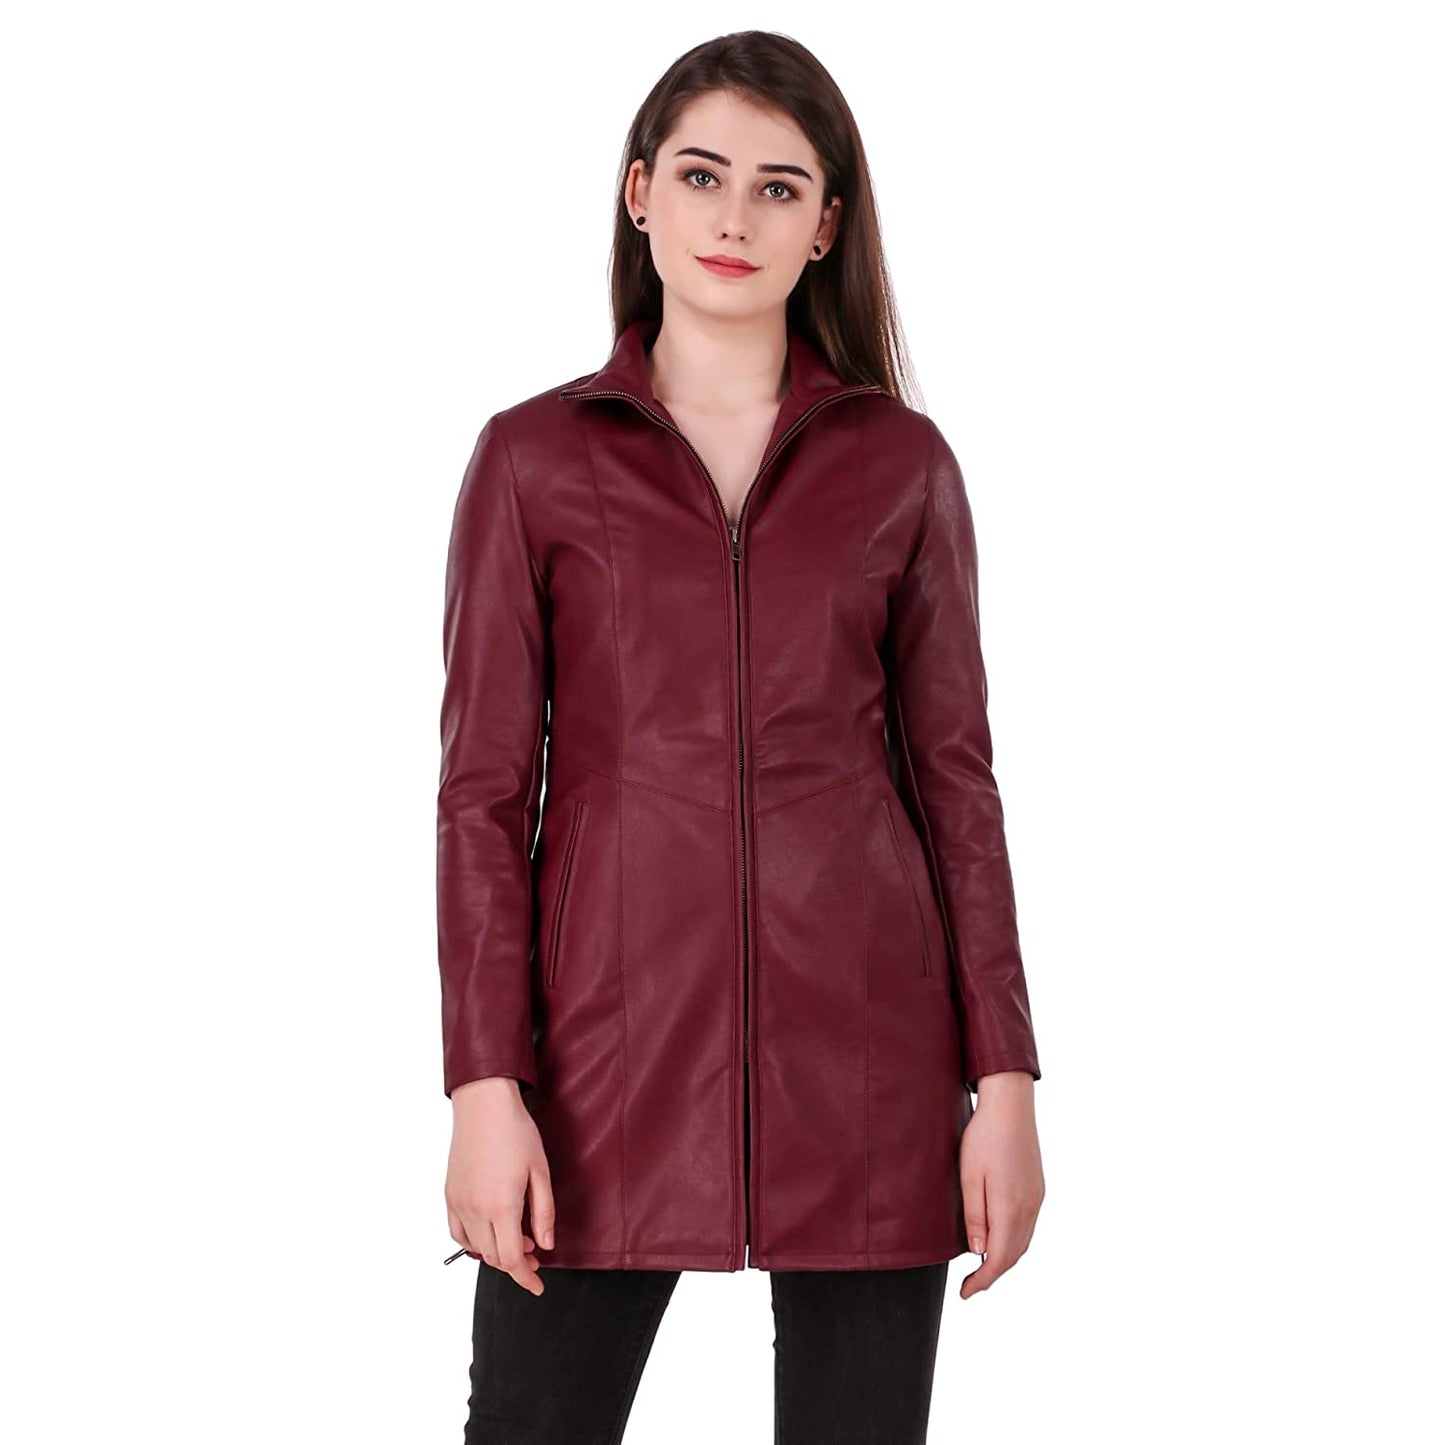 Leather Retail Women's Solid Regular Jacket